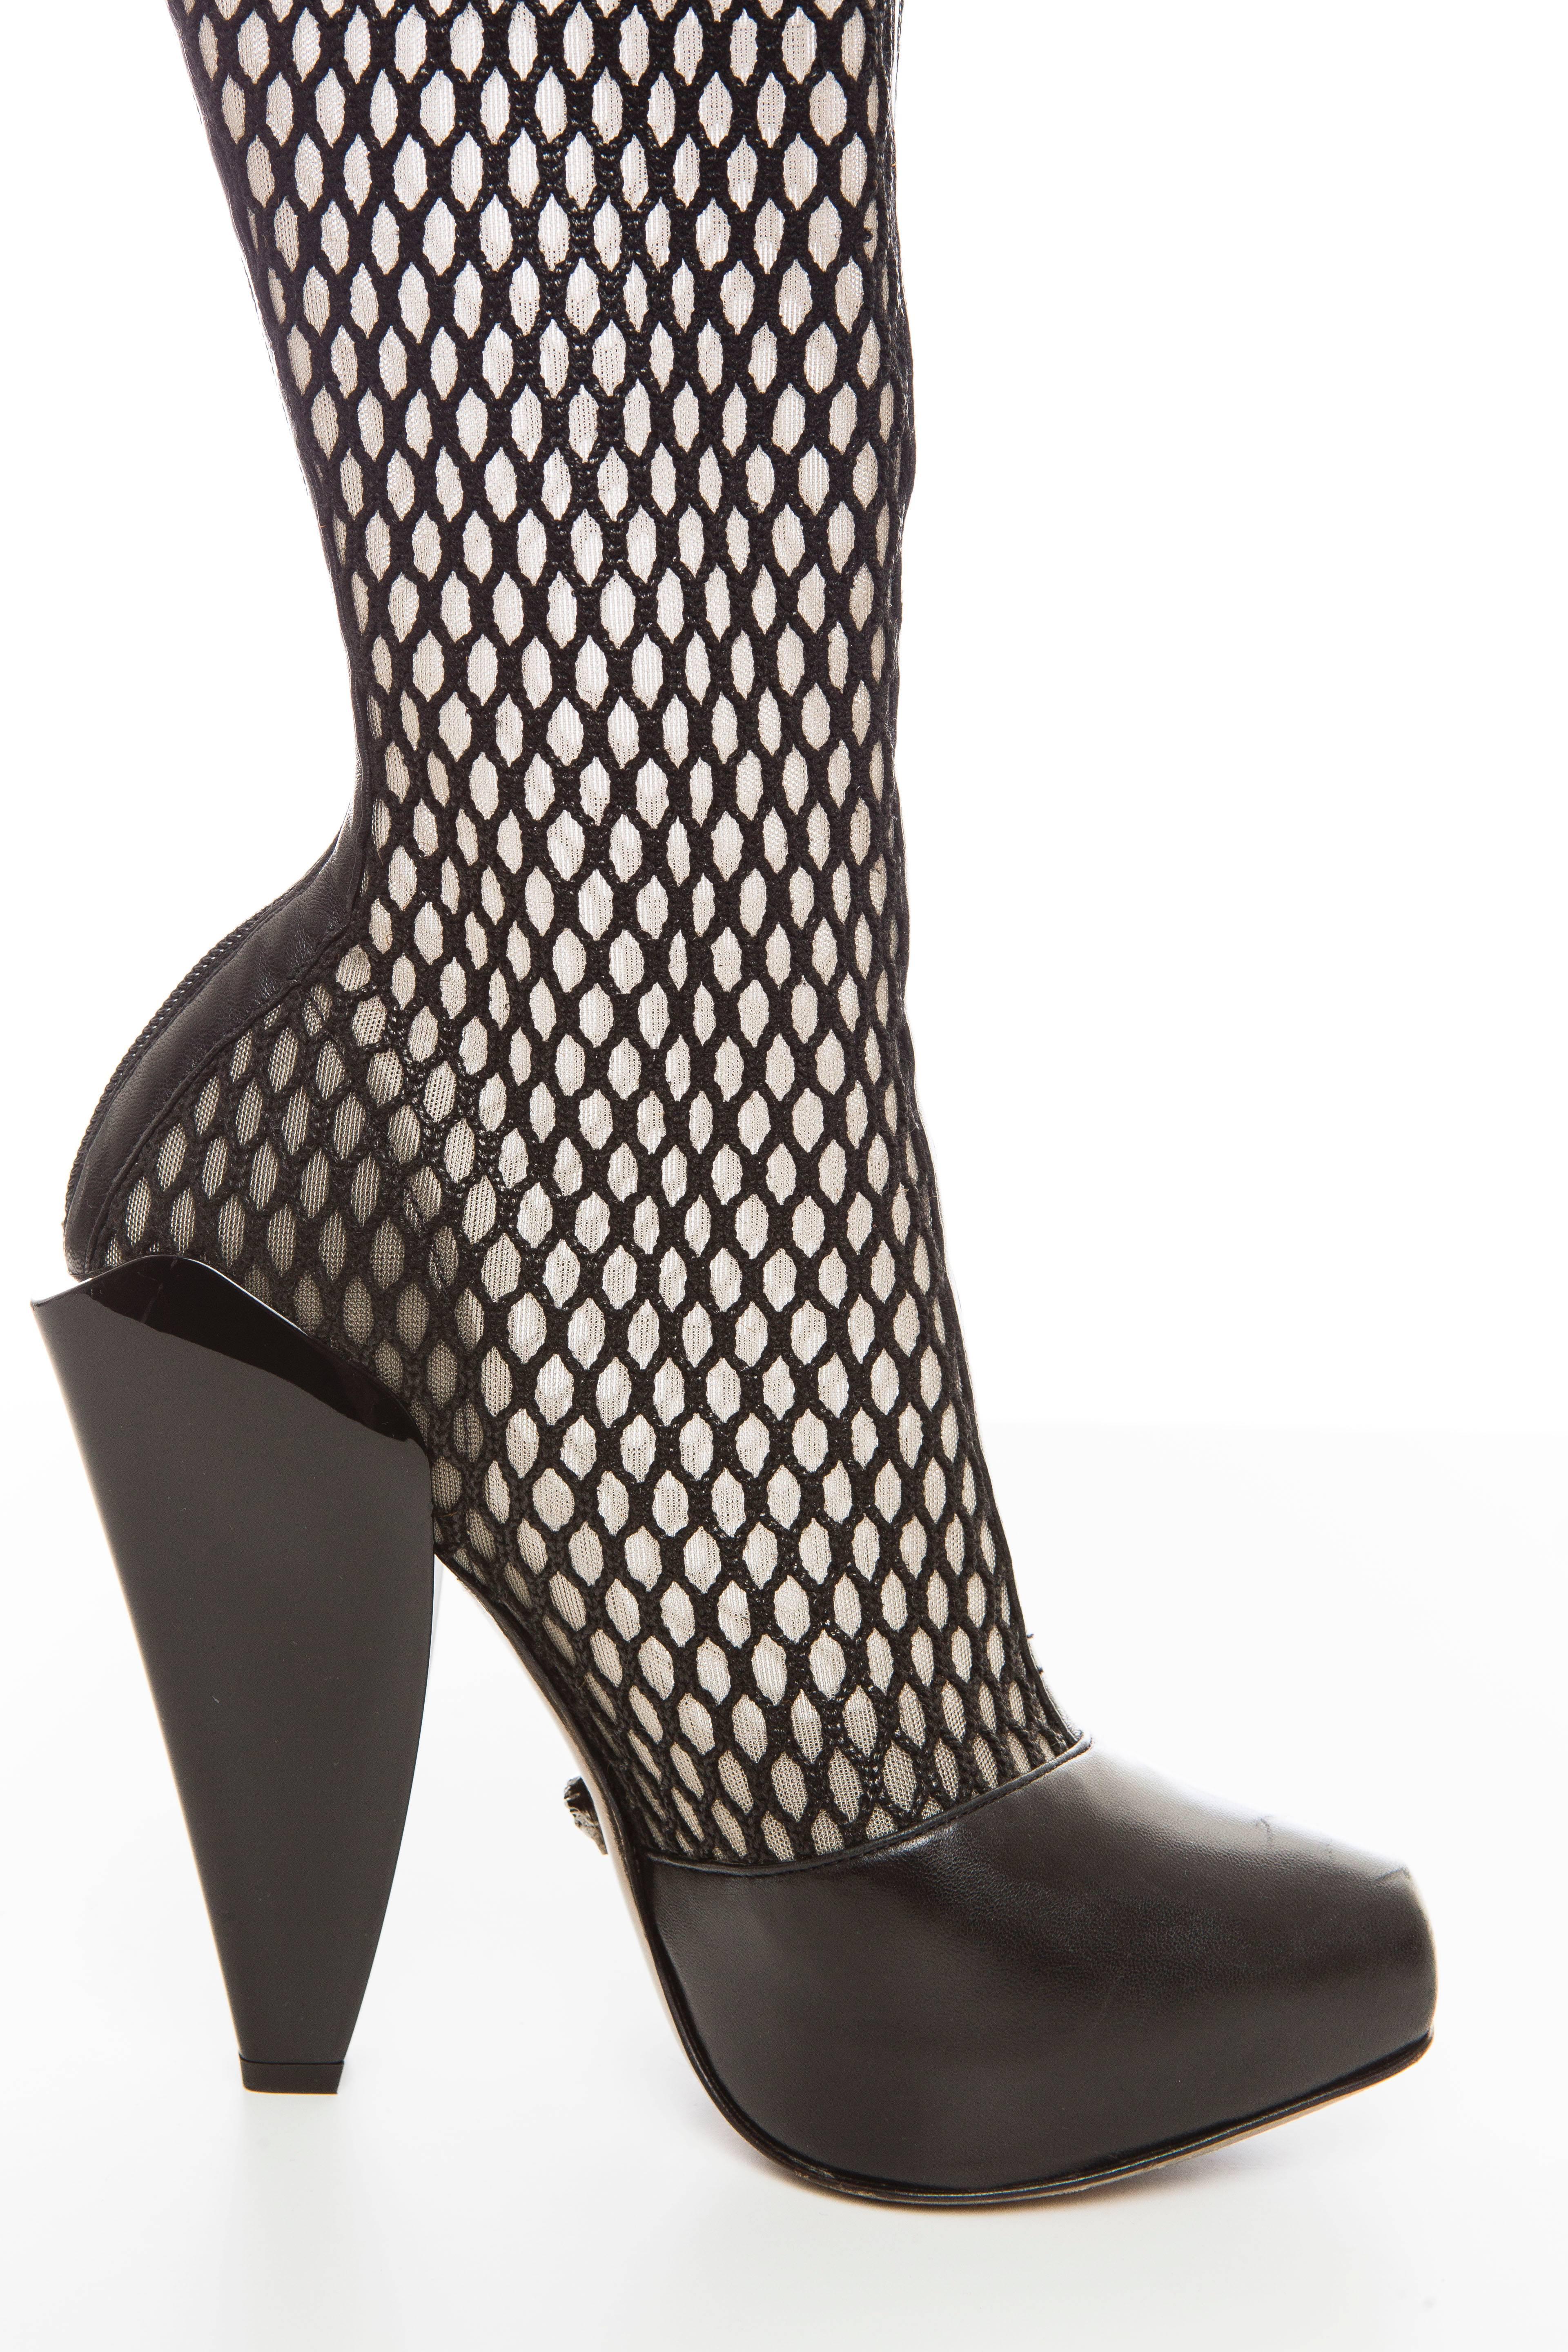 Versace Black Woven Mesh Boots, Autumn - Winter 2012 For Sale 2